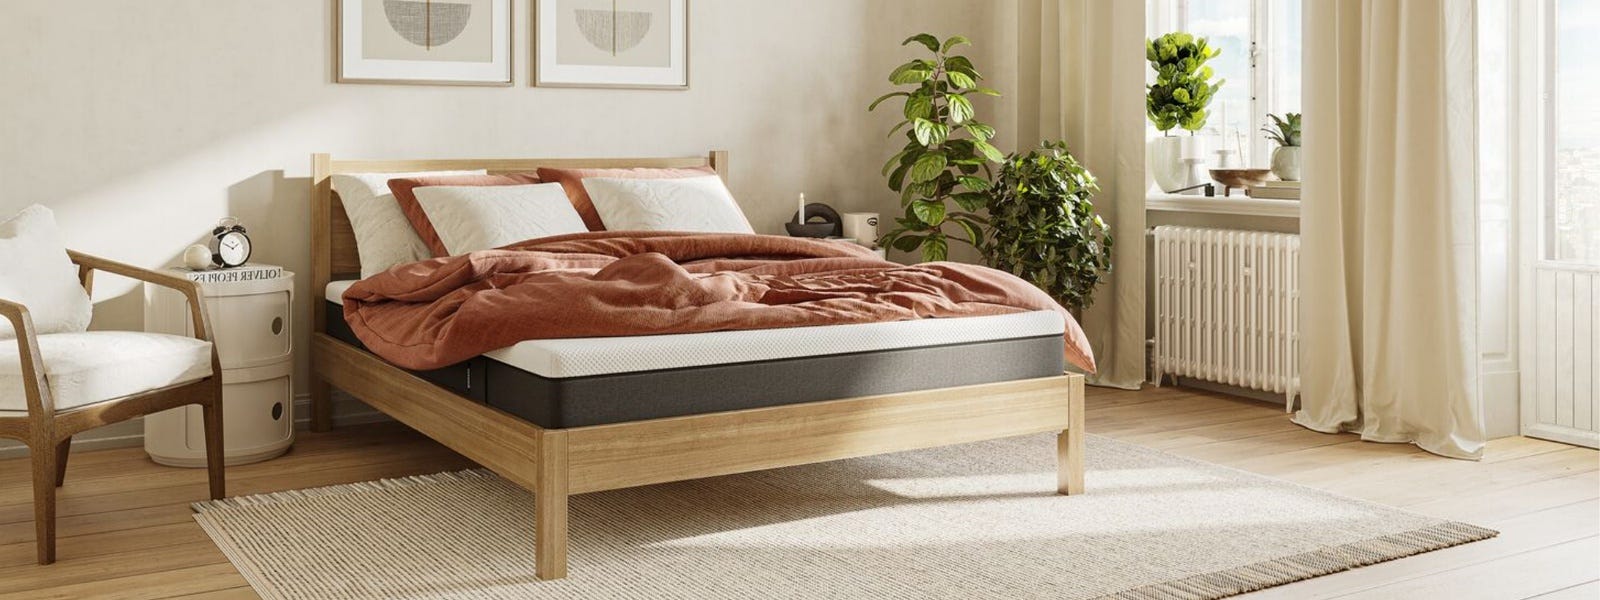 emma sleep houten bed